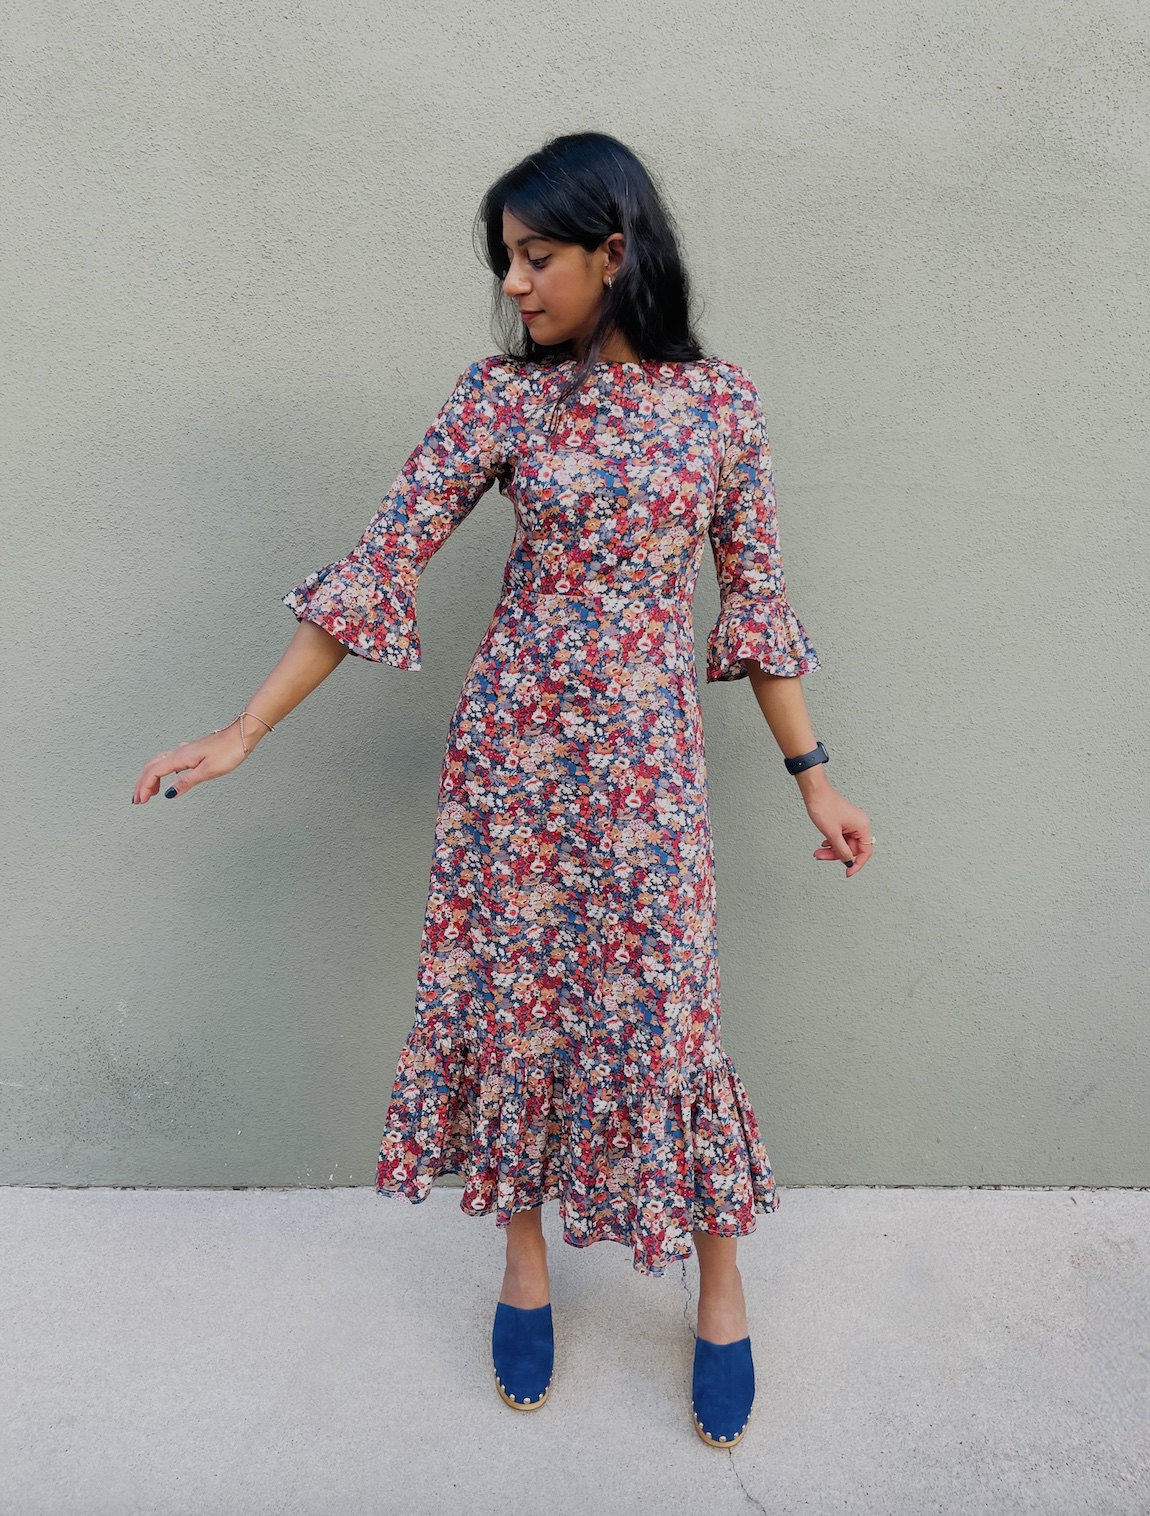 Akinori dress sewing pattern | Wardrobe By Me - We love sewing!